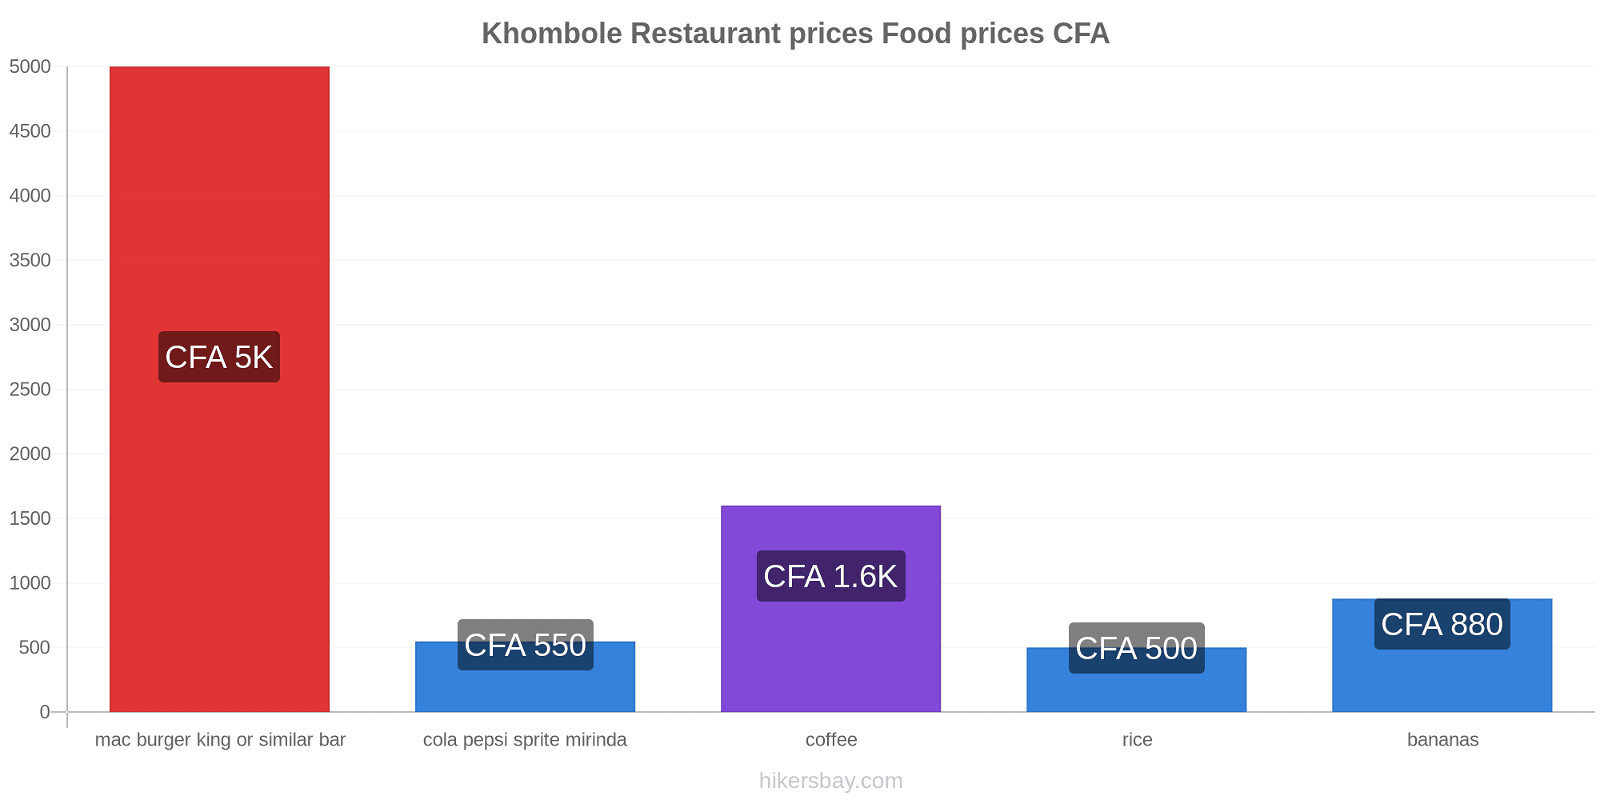 Khombole price changes hikersbay.com